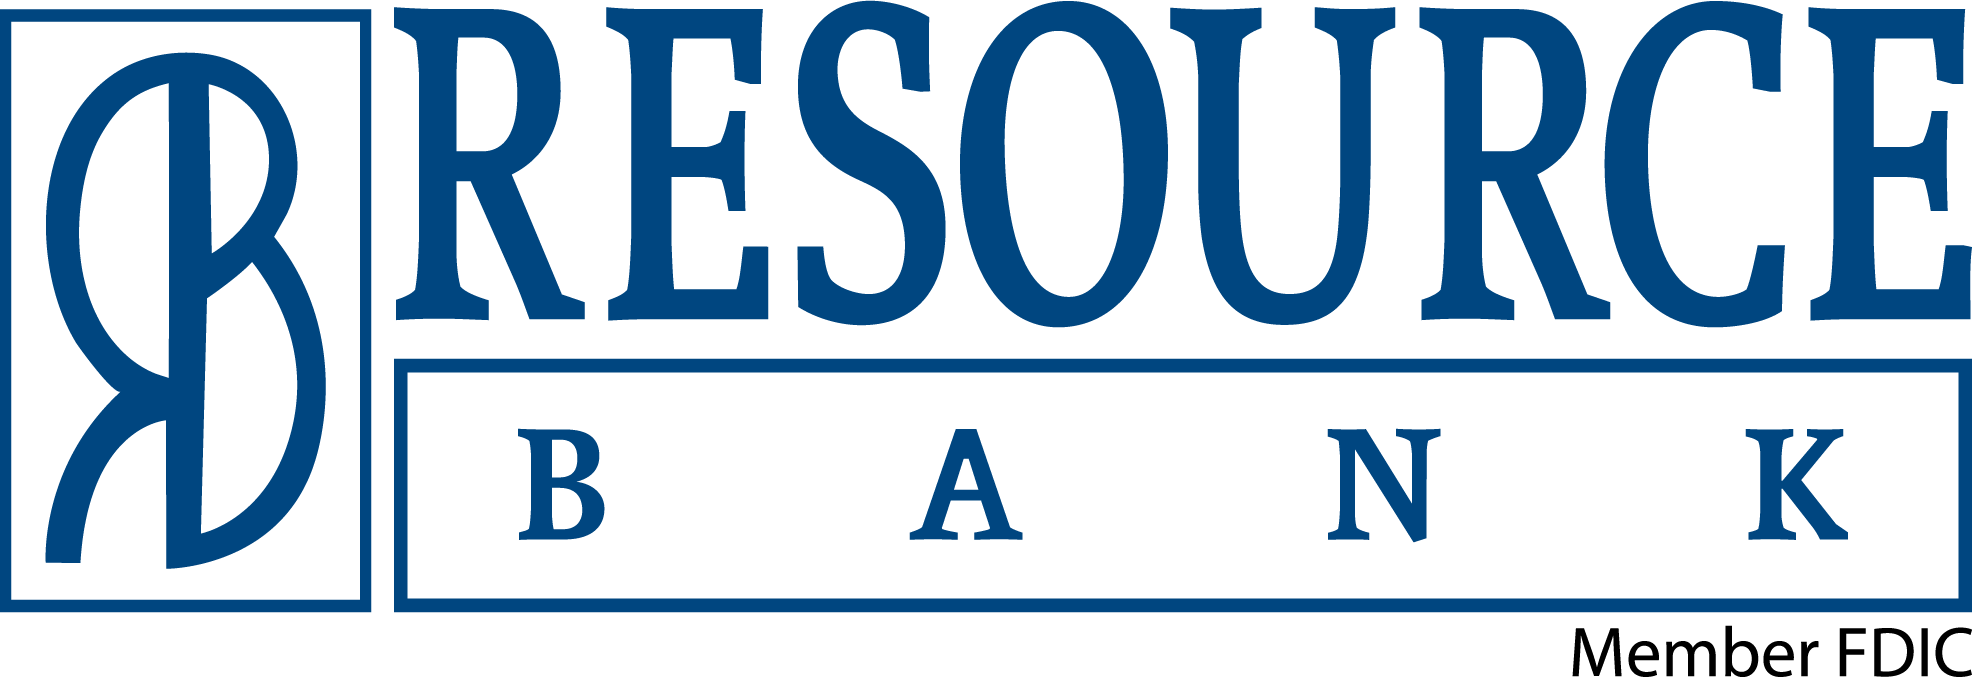 Resource Sponsor Logo BLUE